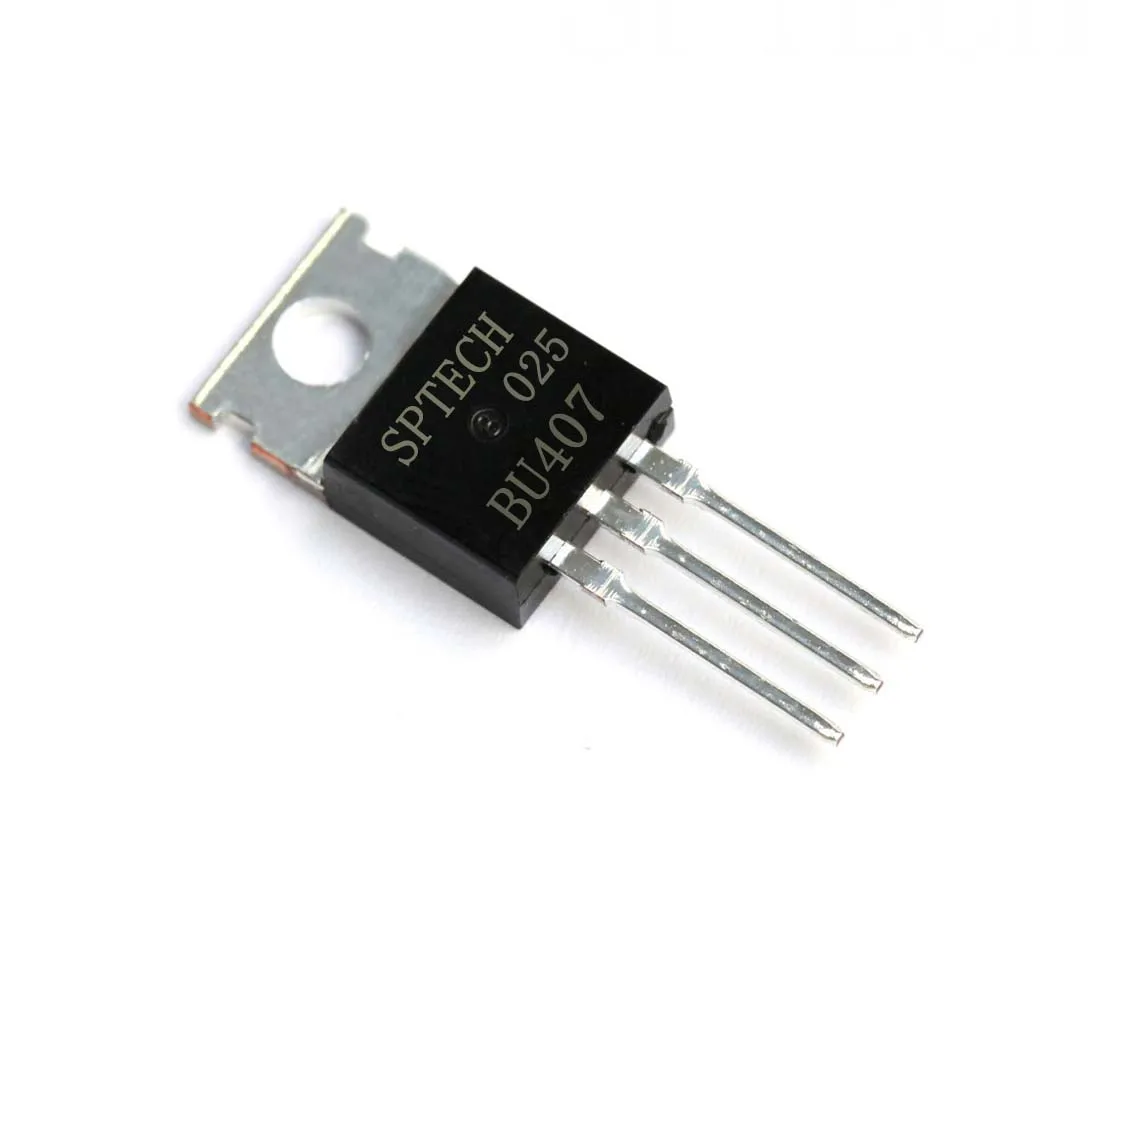 5 x BU407 Transistor TO220 